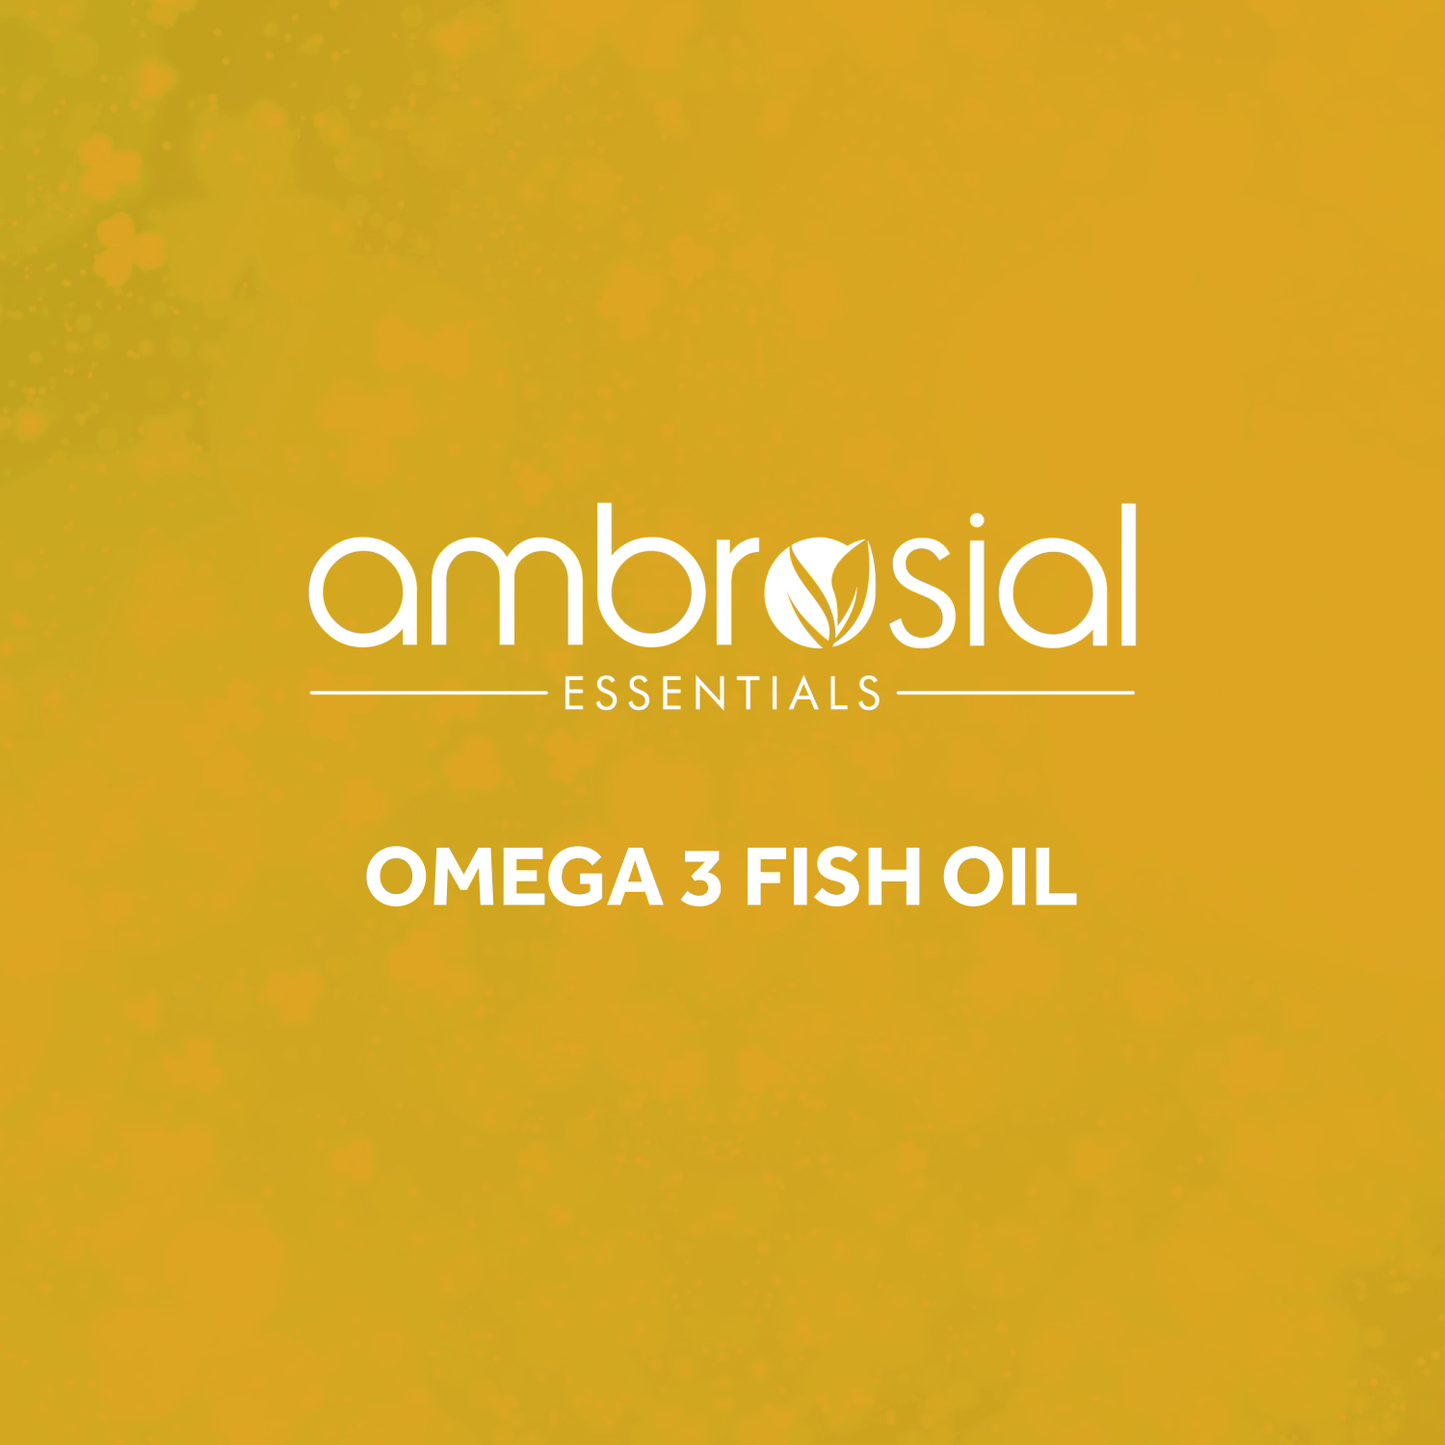 Ambrosial Omega 3 fish oil text